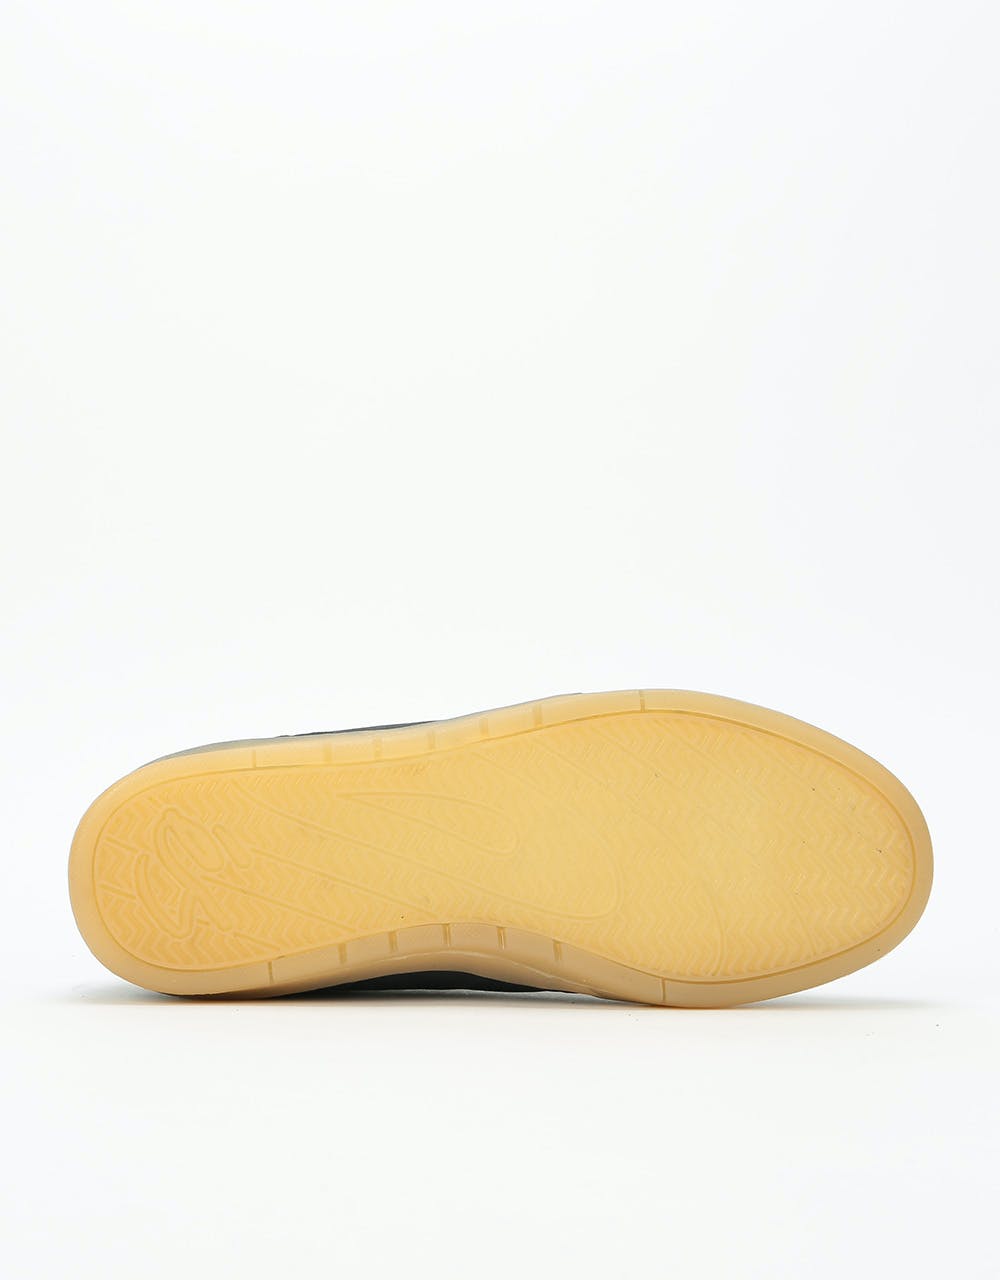 Emerica Wino Standard Skate Shoes - Navy/Gum/Gold